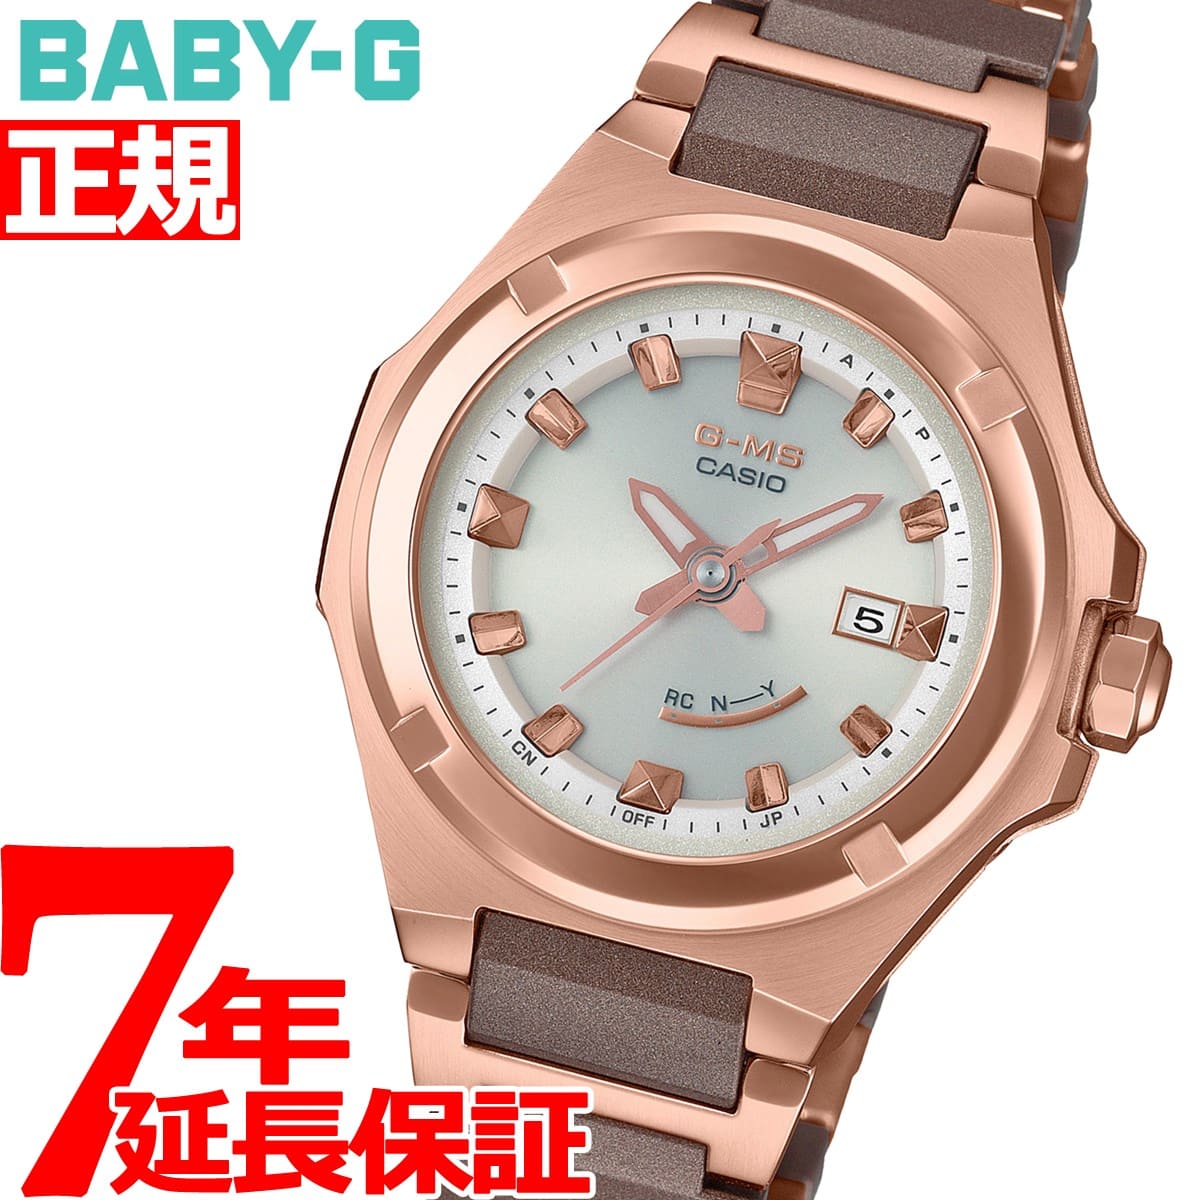 New]Casio BABY-G Ladies G-MS Radio Tough Solar Watch MSG-W300CG-5AJF - BE  FORWARD Store